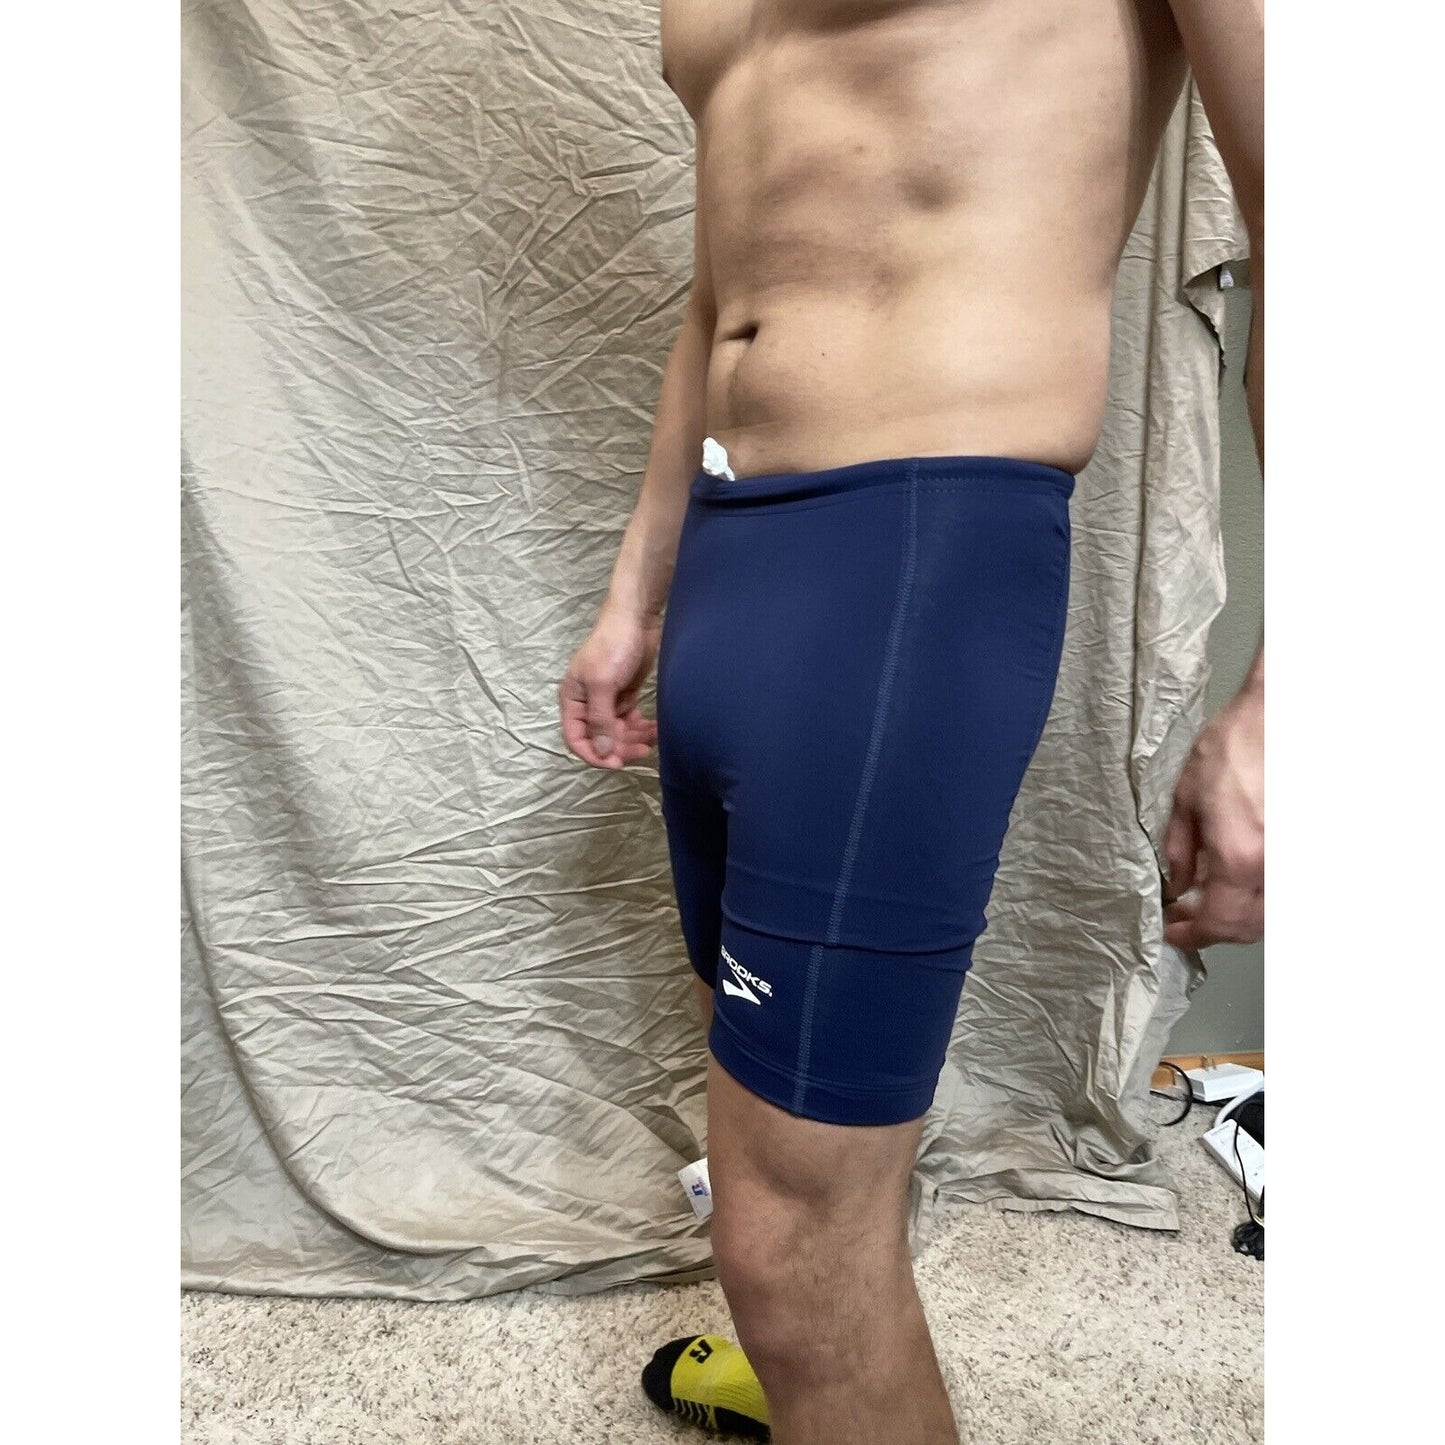 Men's brooks nylon spandex Navy Blue  small compression shorts